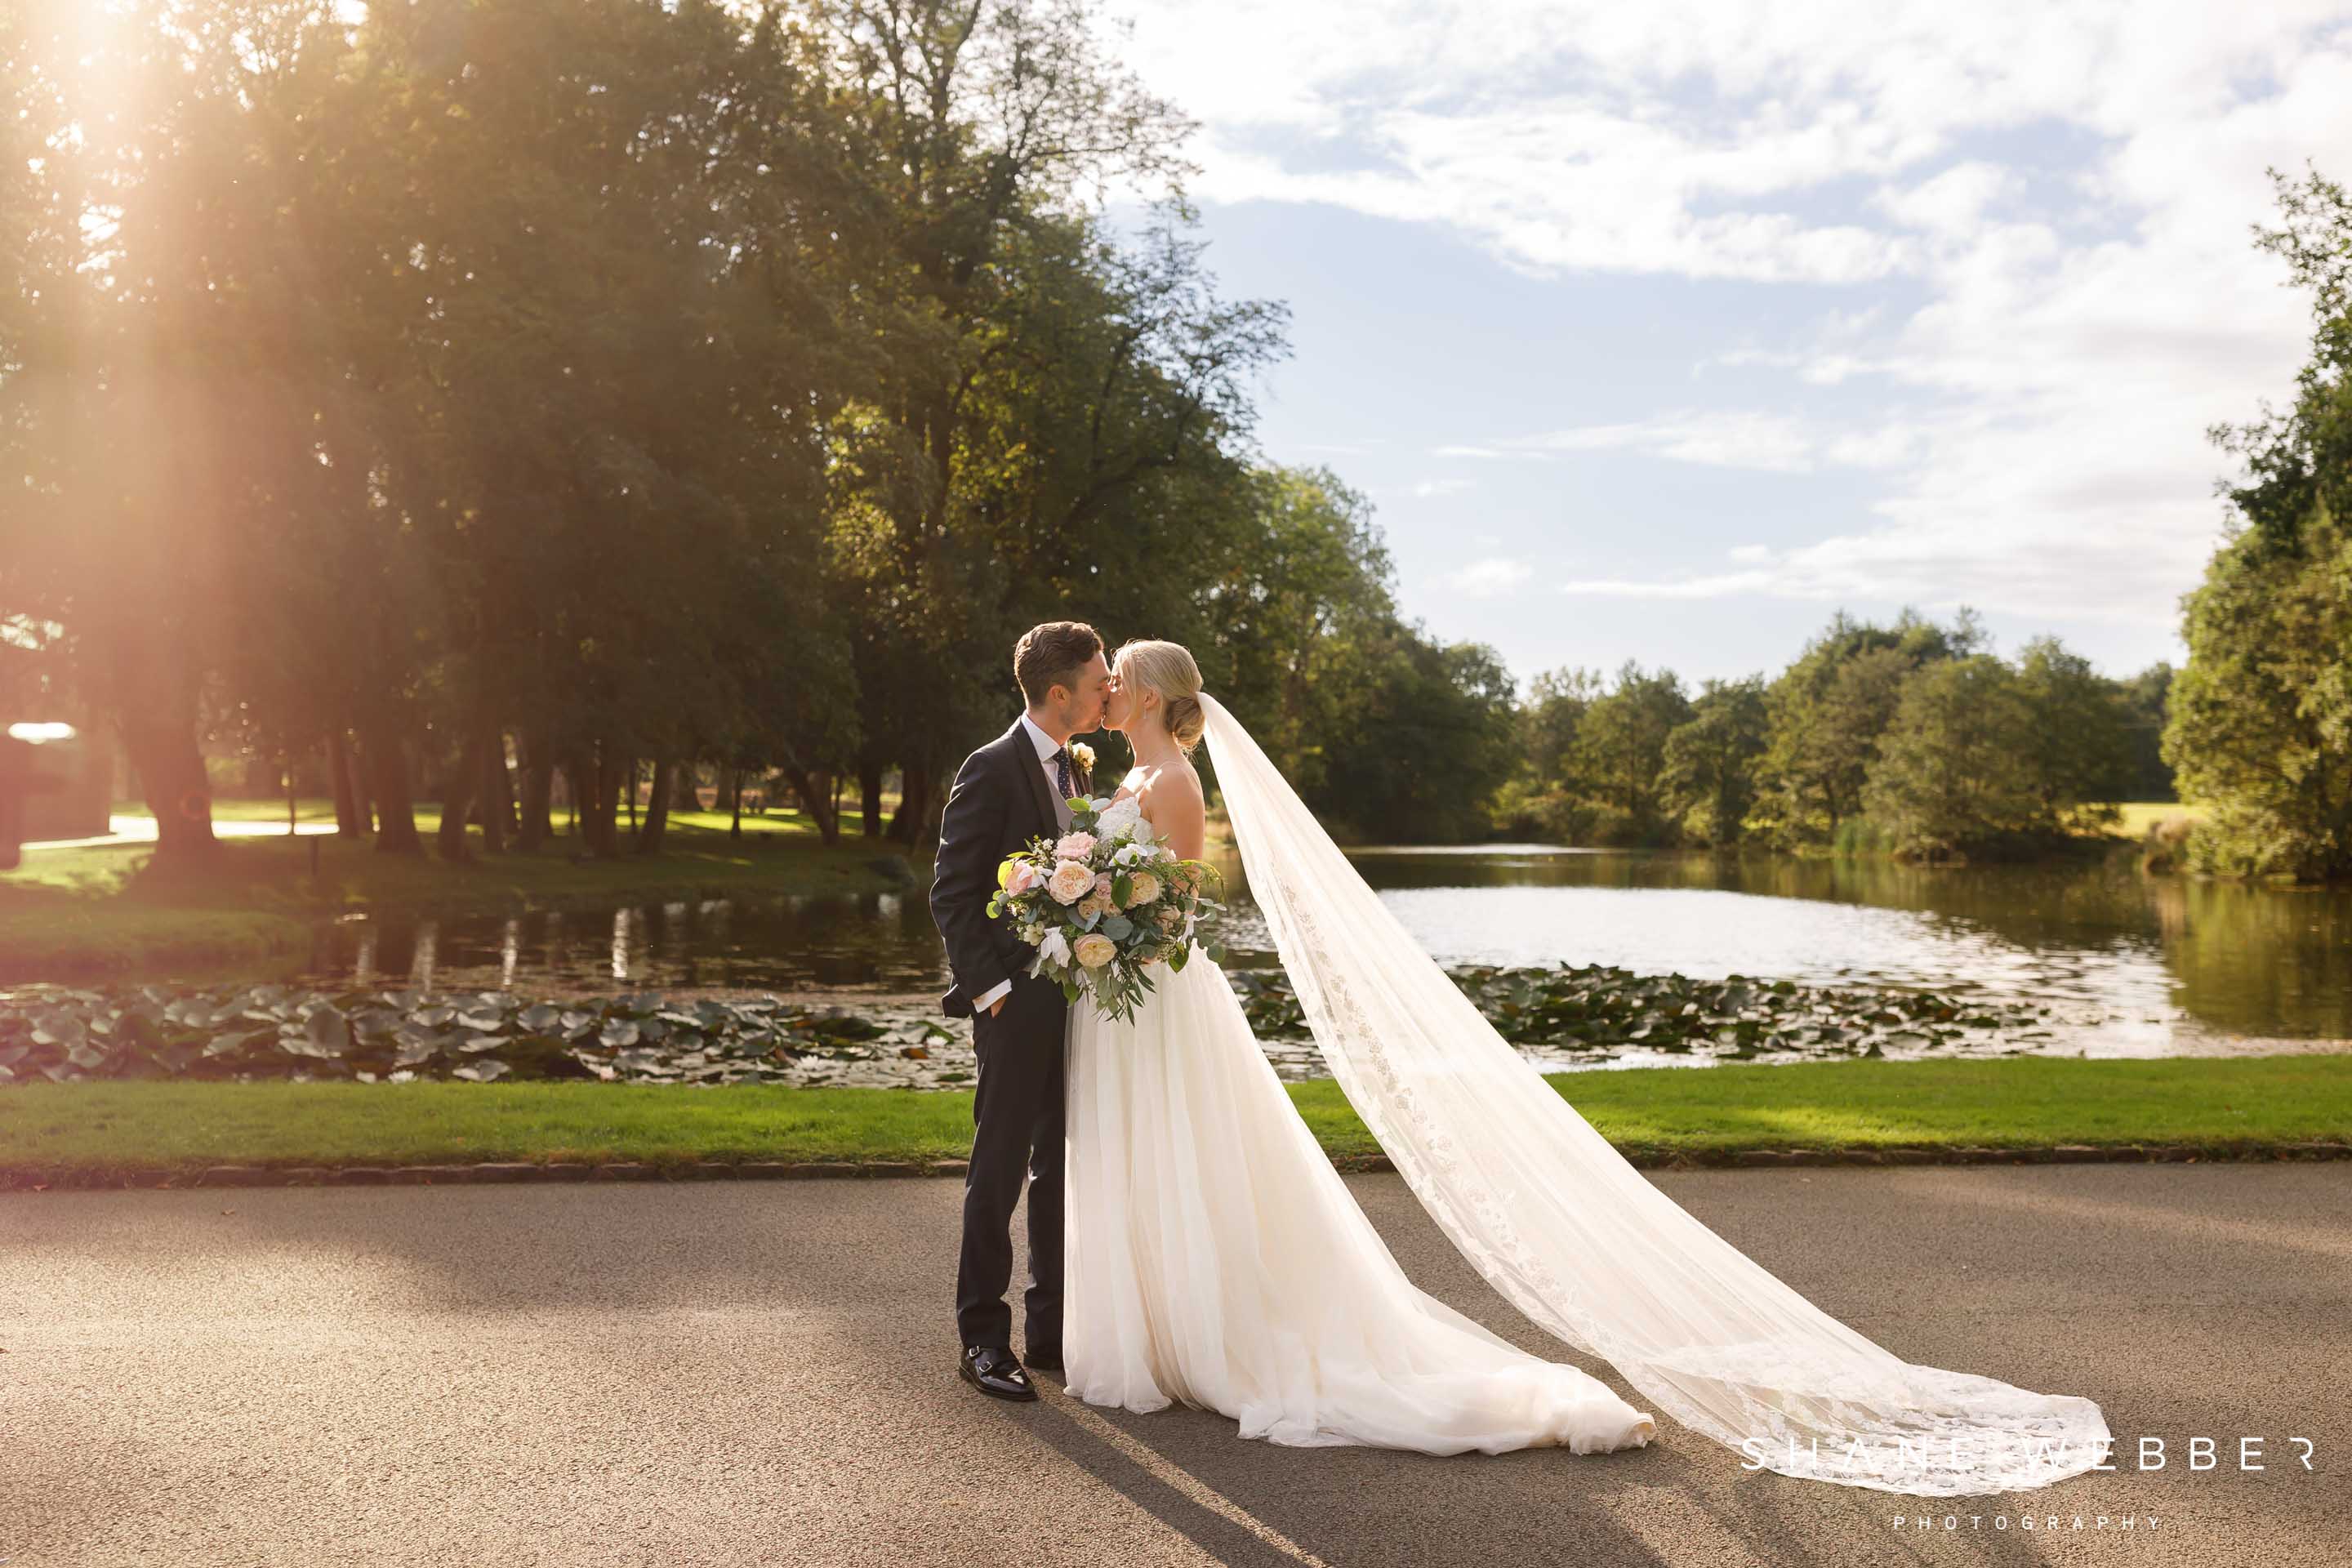 Wedding photos by the lake at Dorfold Hall